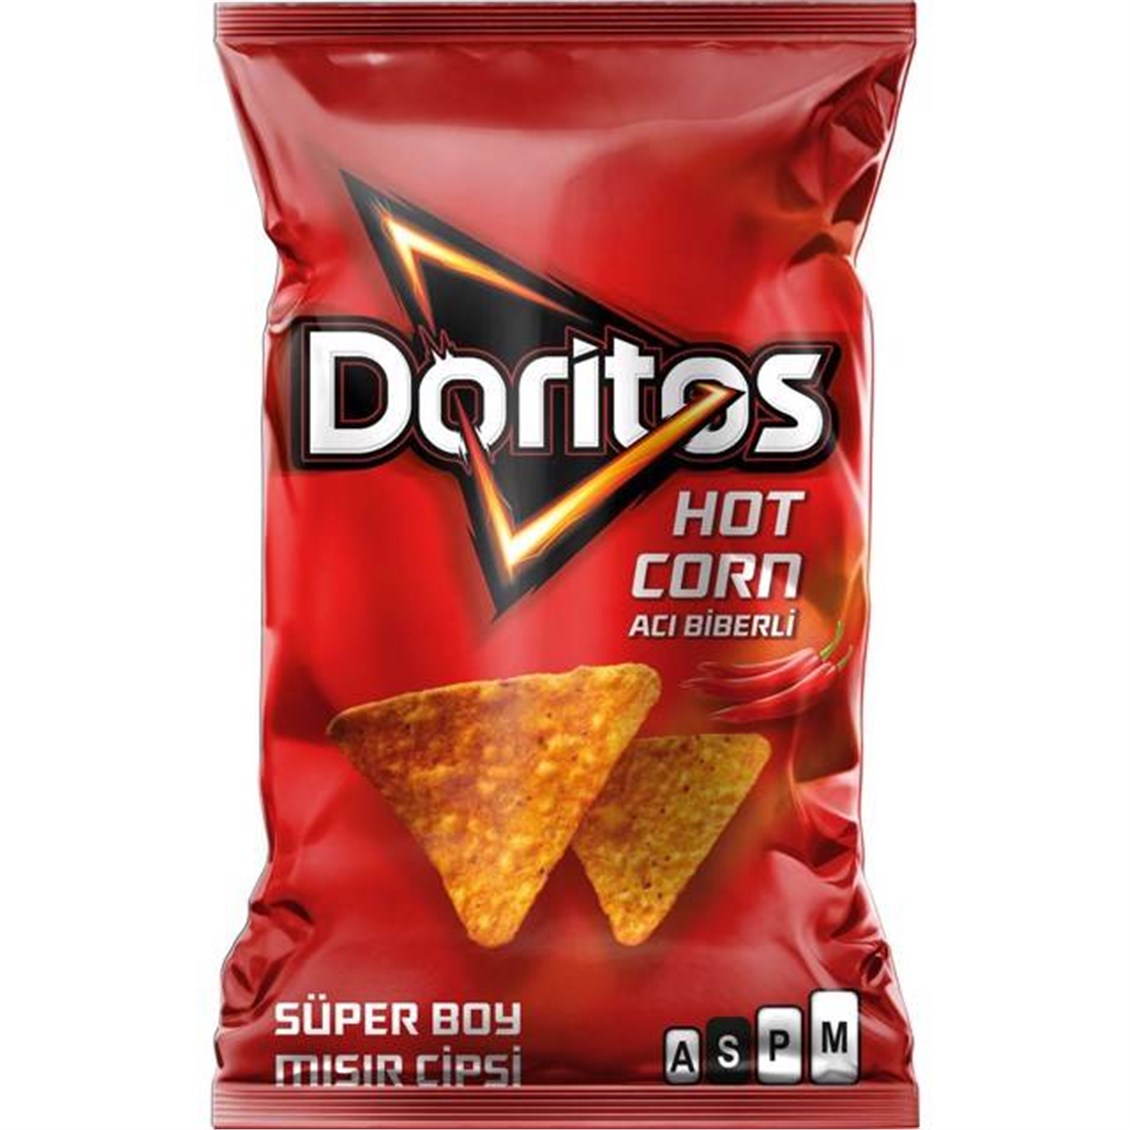 Doritos Hot Corn Acı Biberli Cips Süper Boy 113 Gr - Onur Market